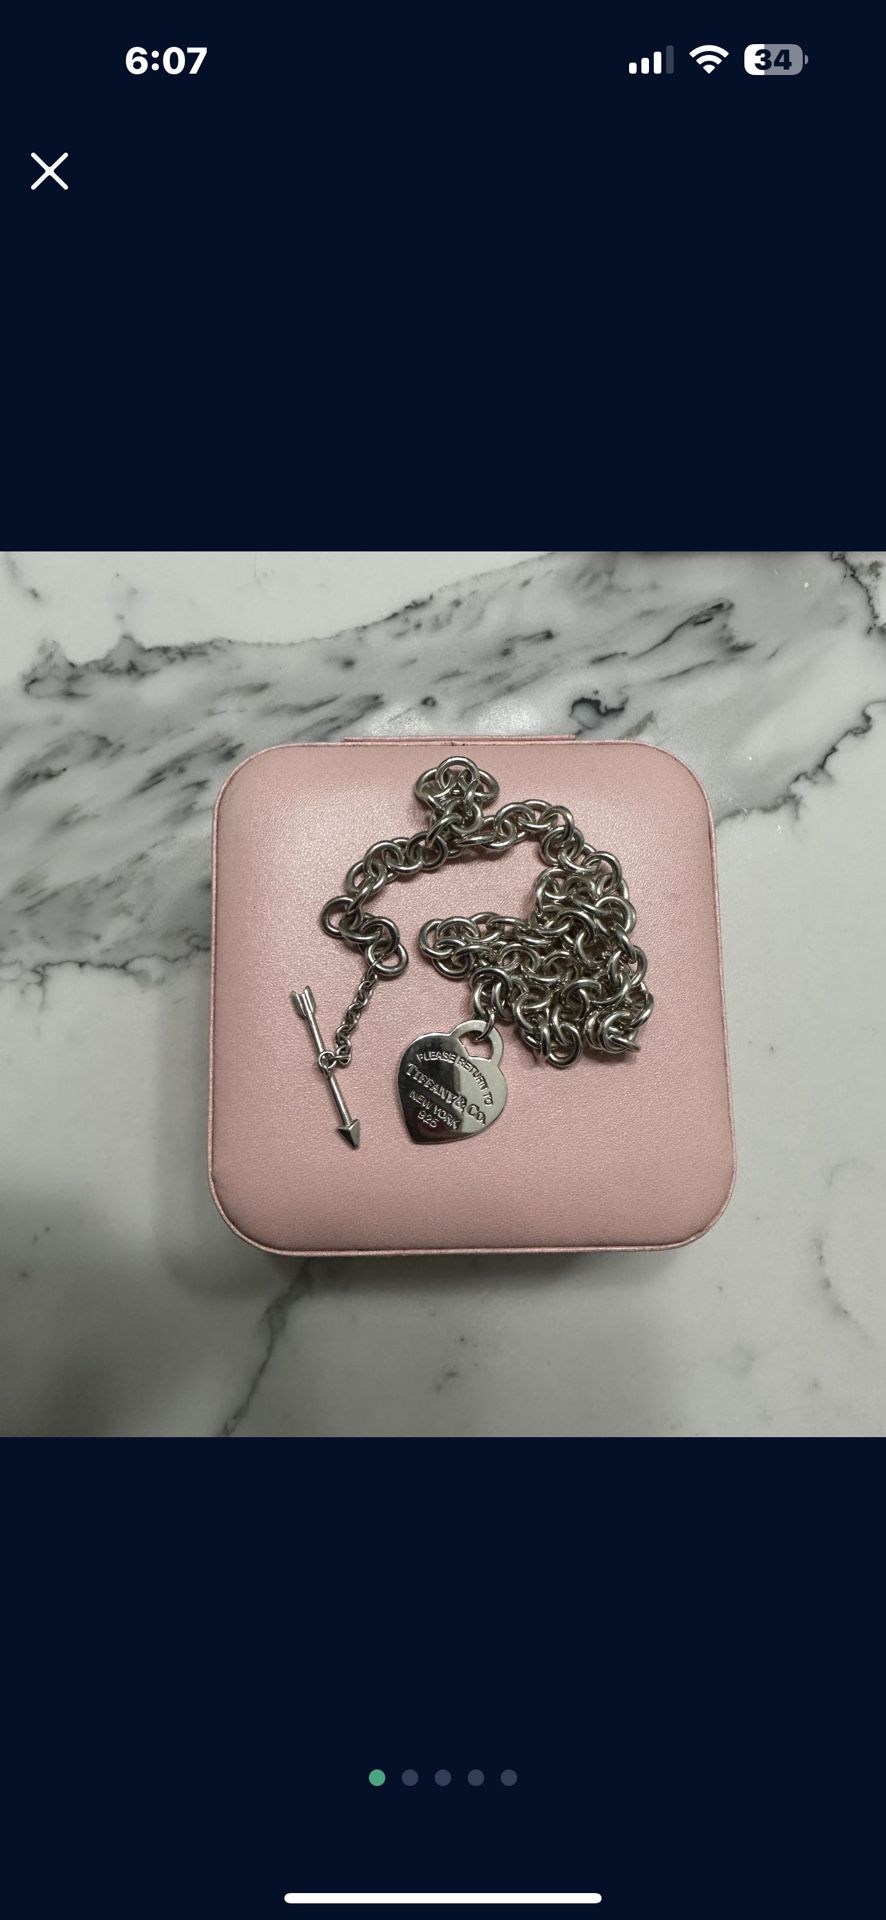 Gently Worn Tiffany’s Necklace $200